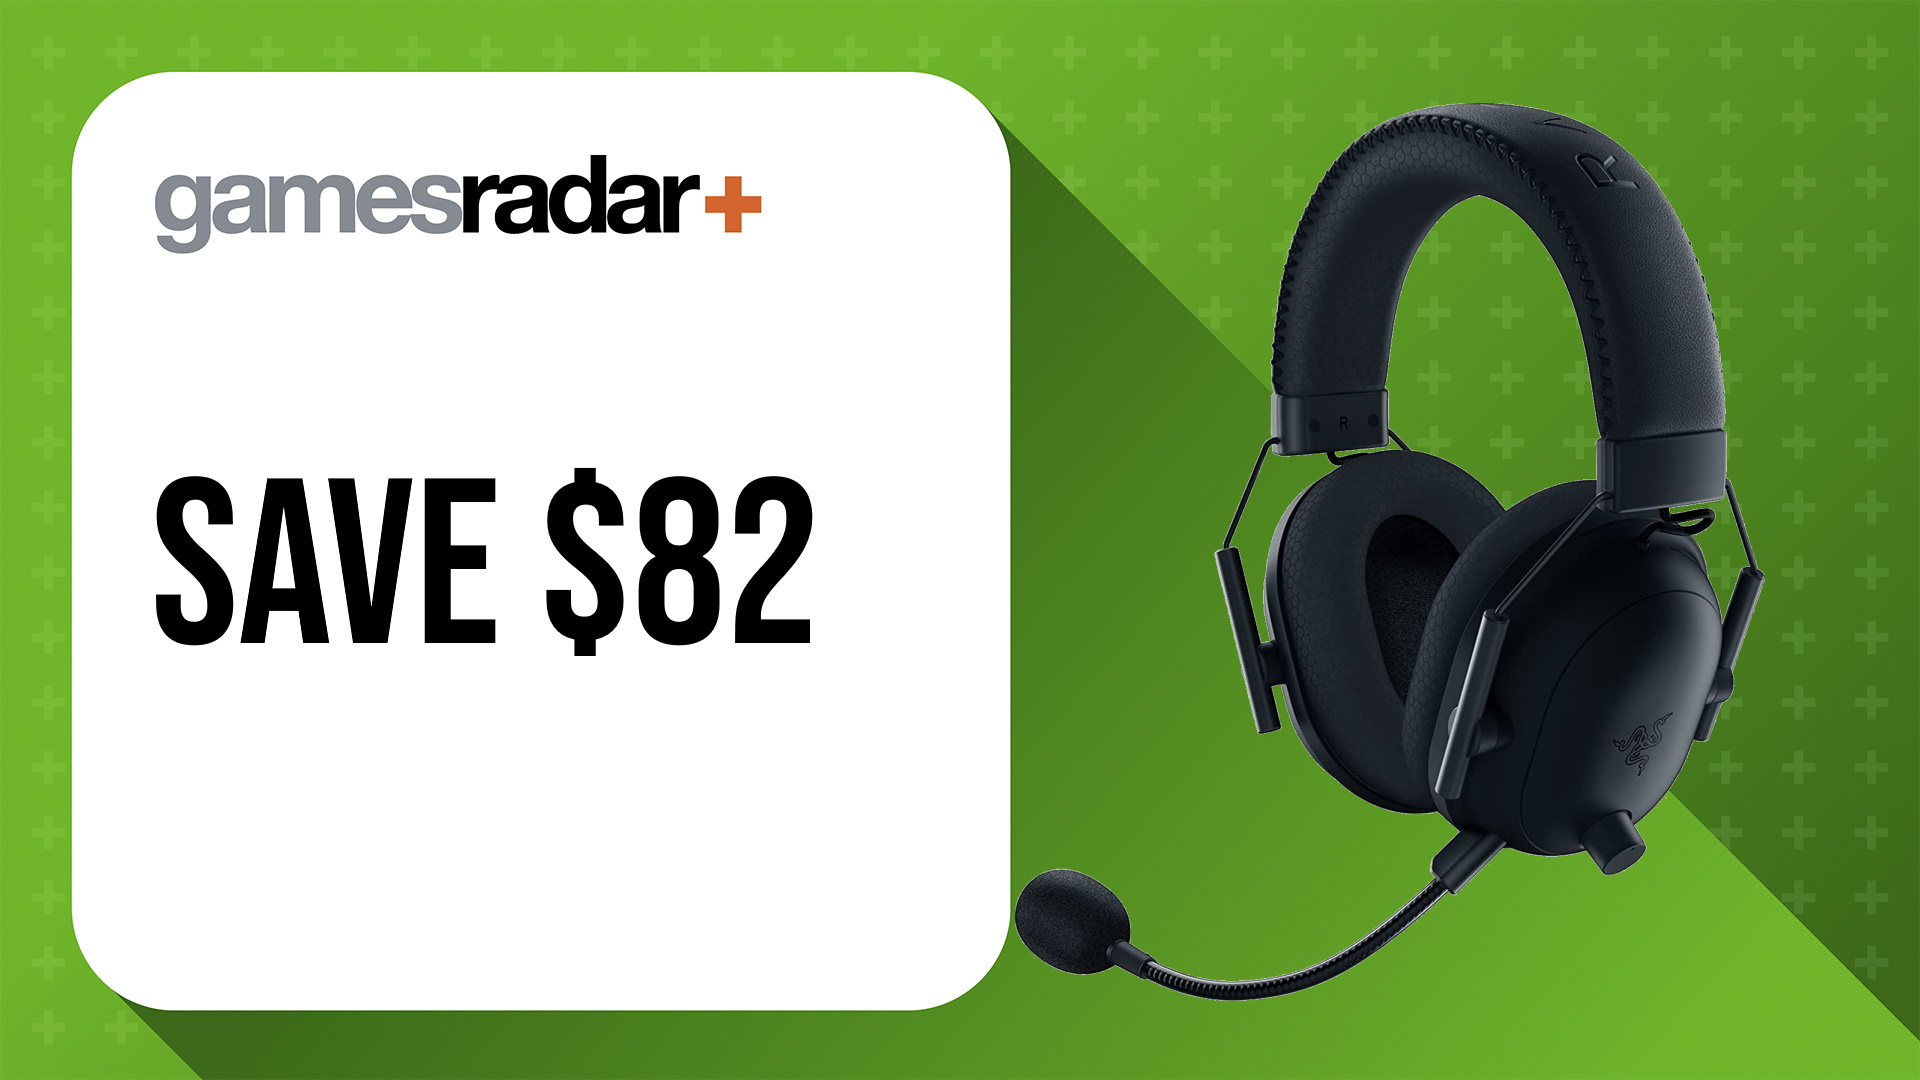 Razer BlackShark V2 Pro wireless gaming headset on a green background with sale information